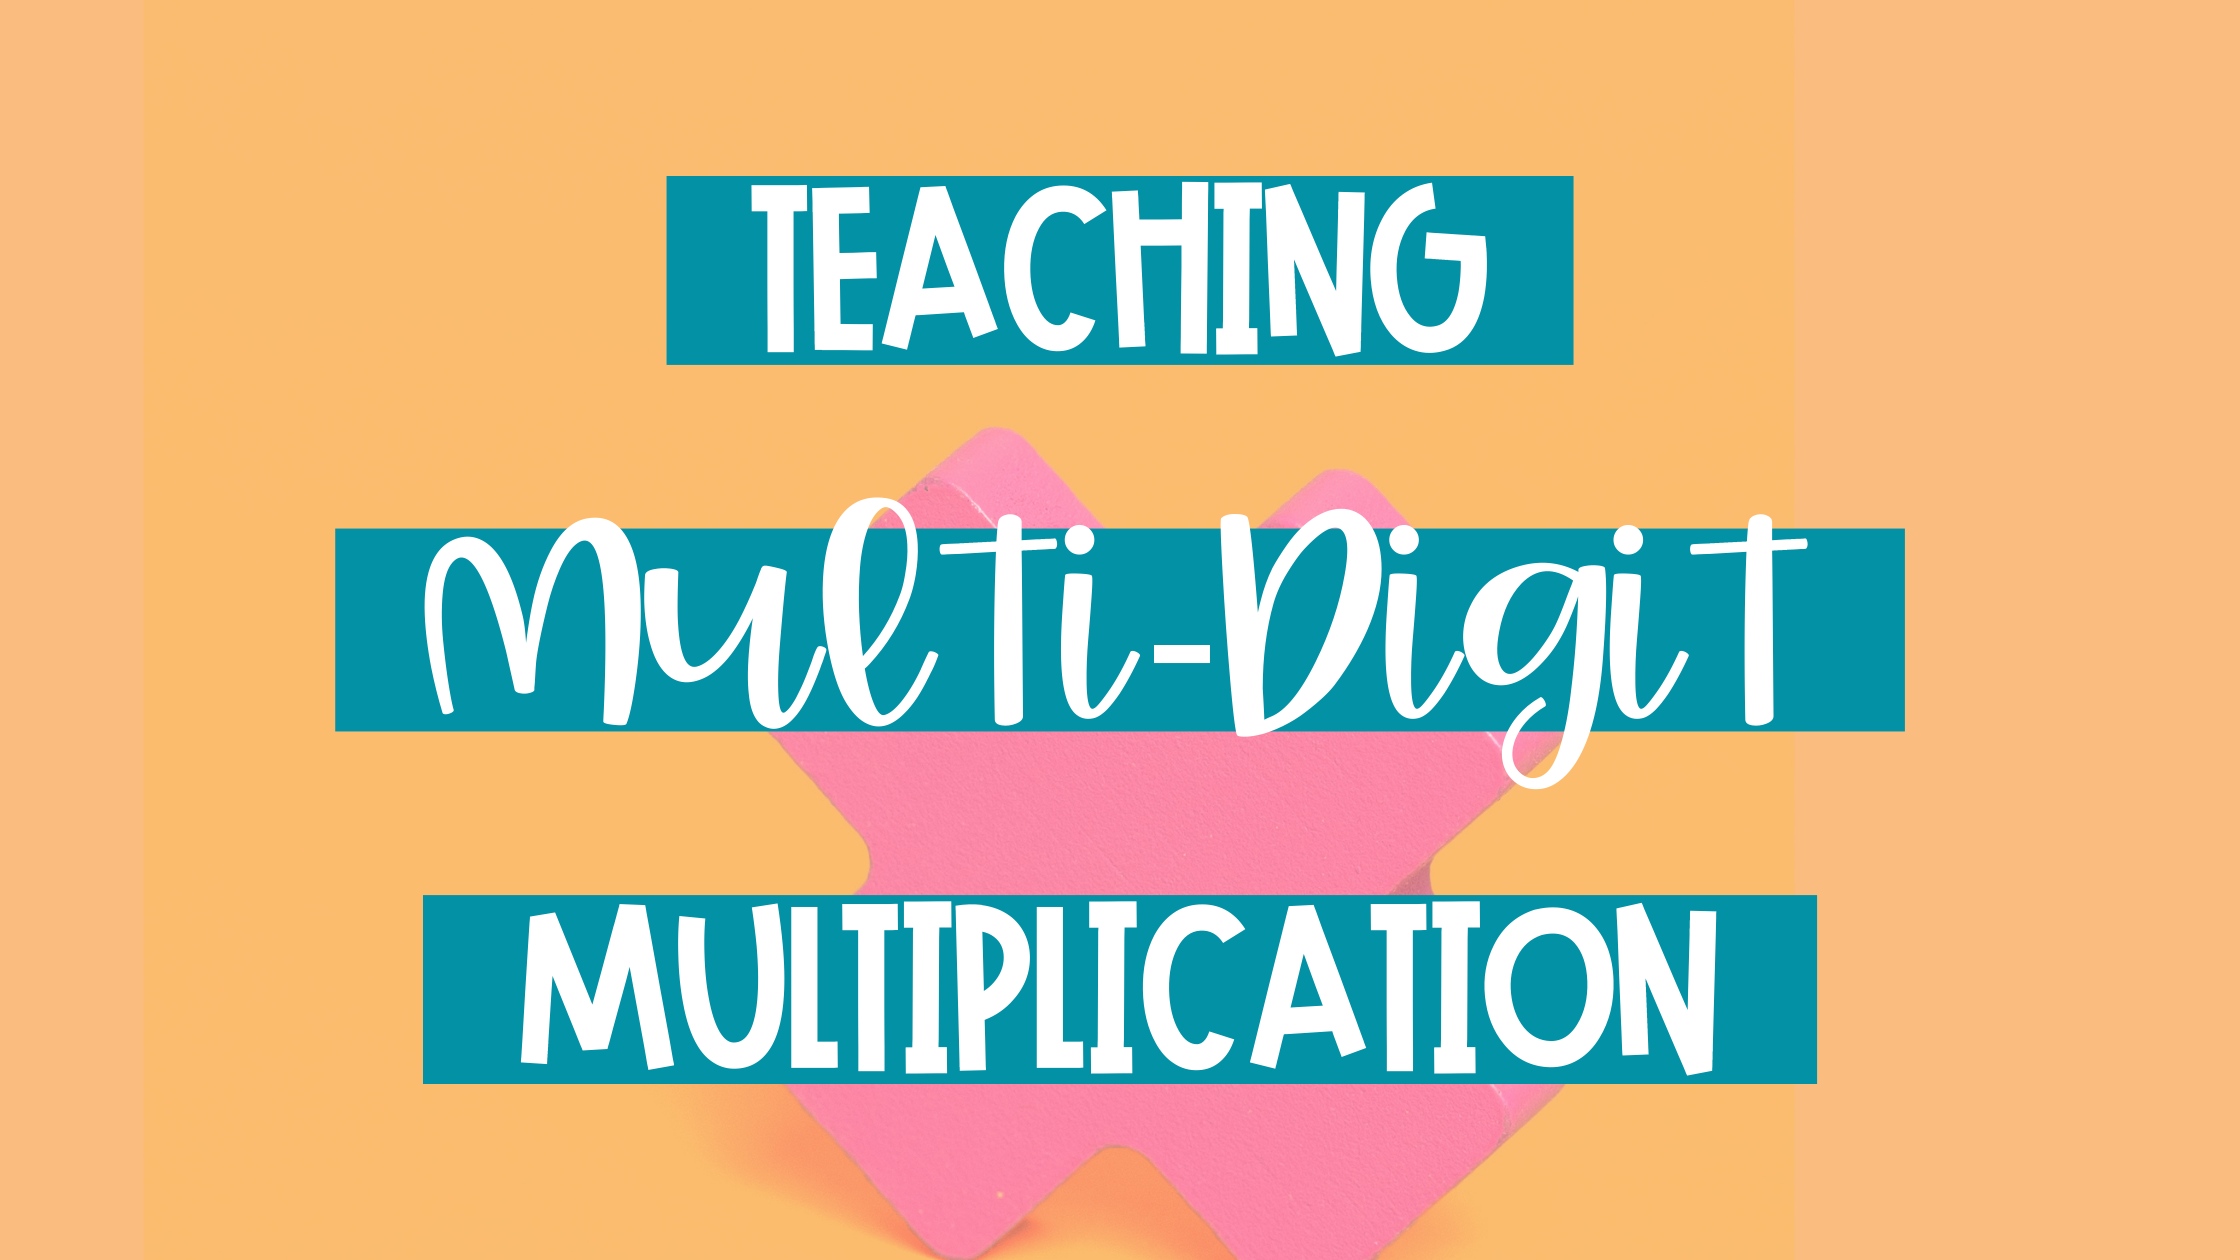 Teaching Multi-Digit Multiplication Blog Post Header Image